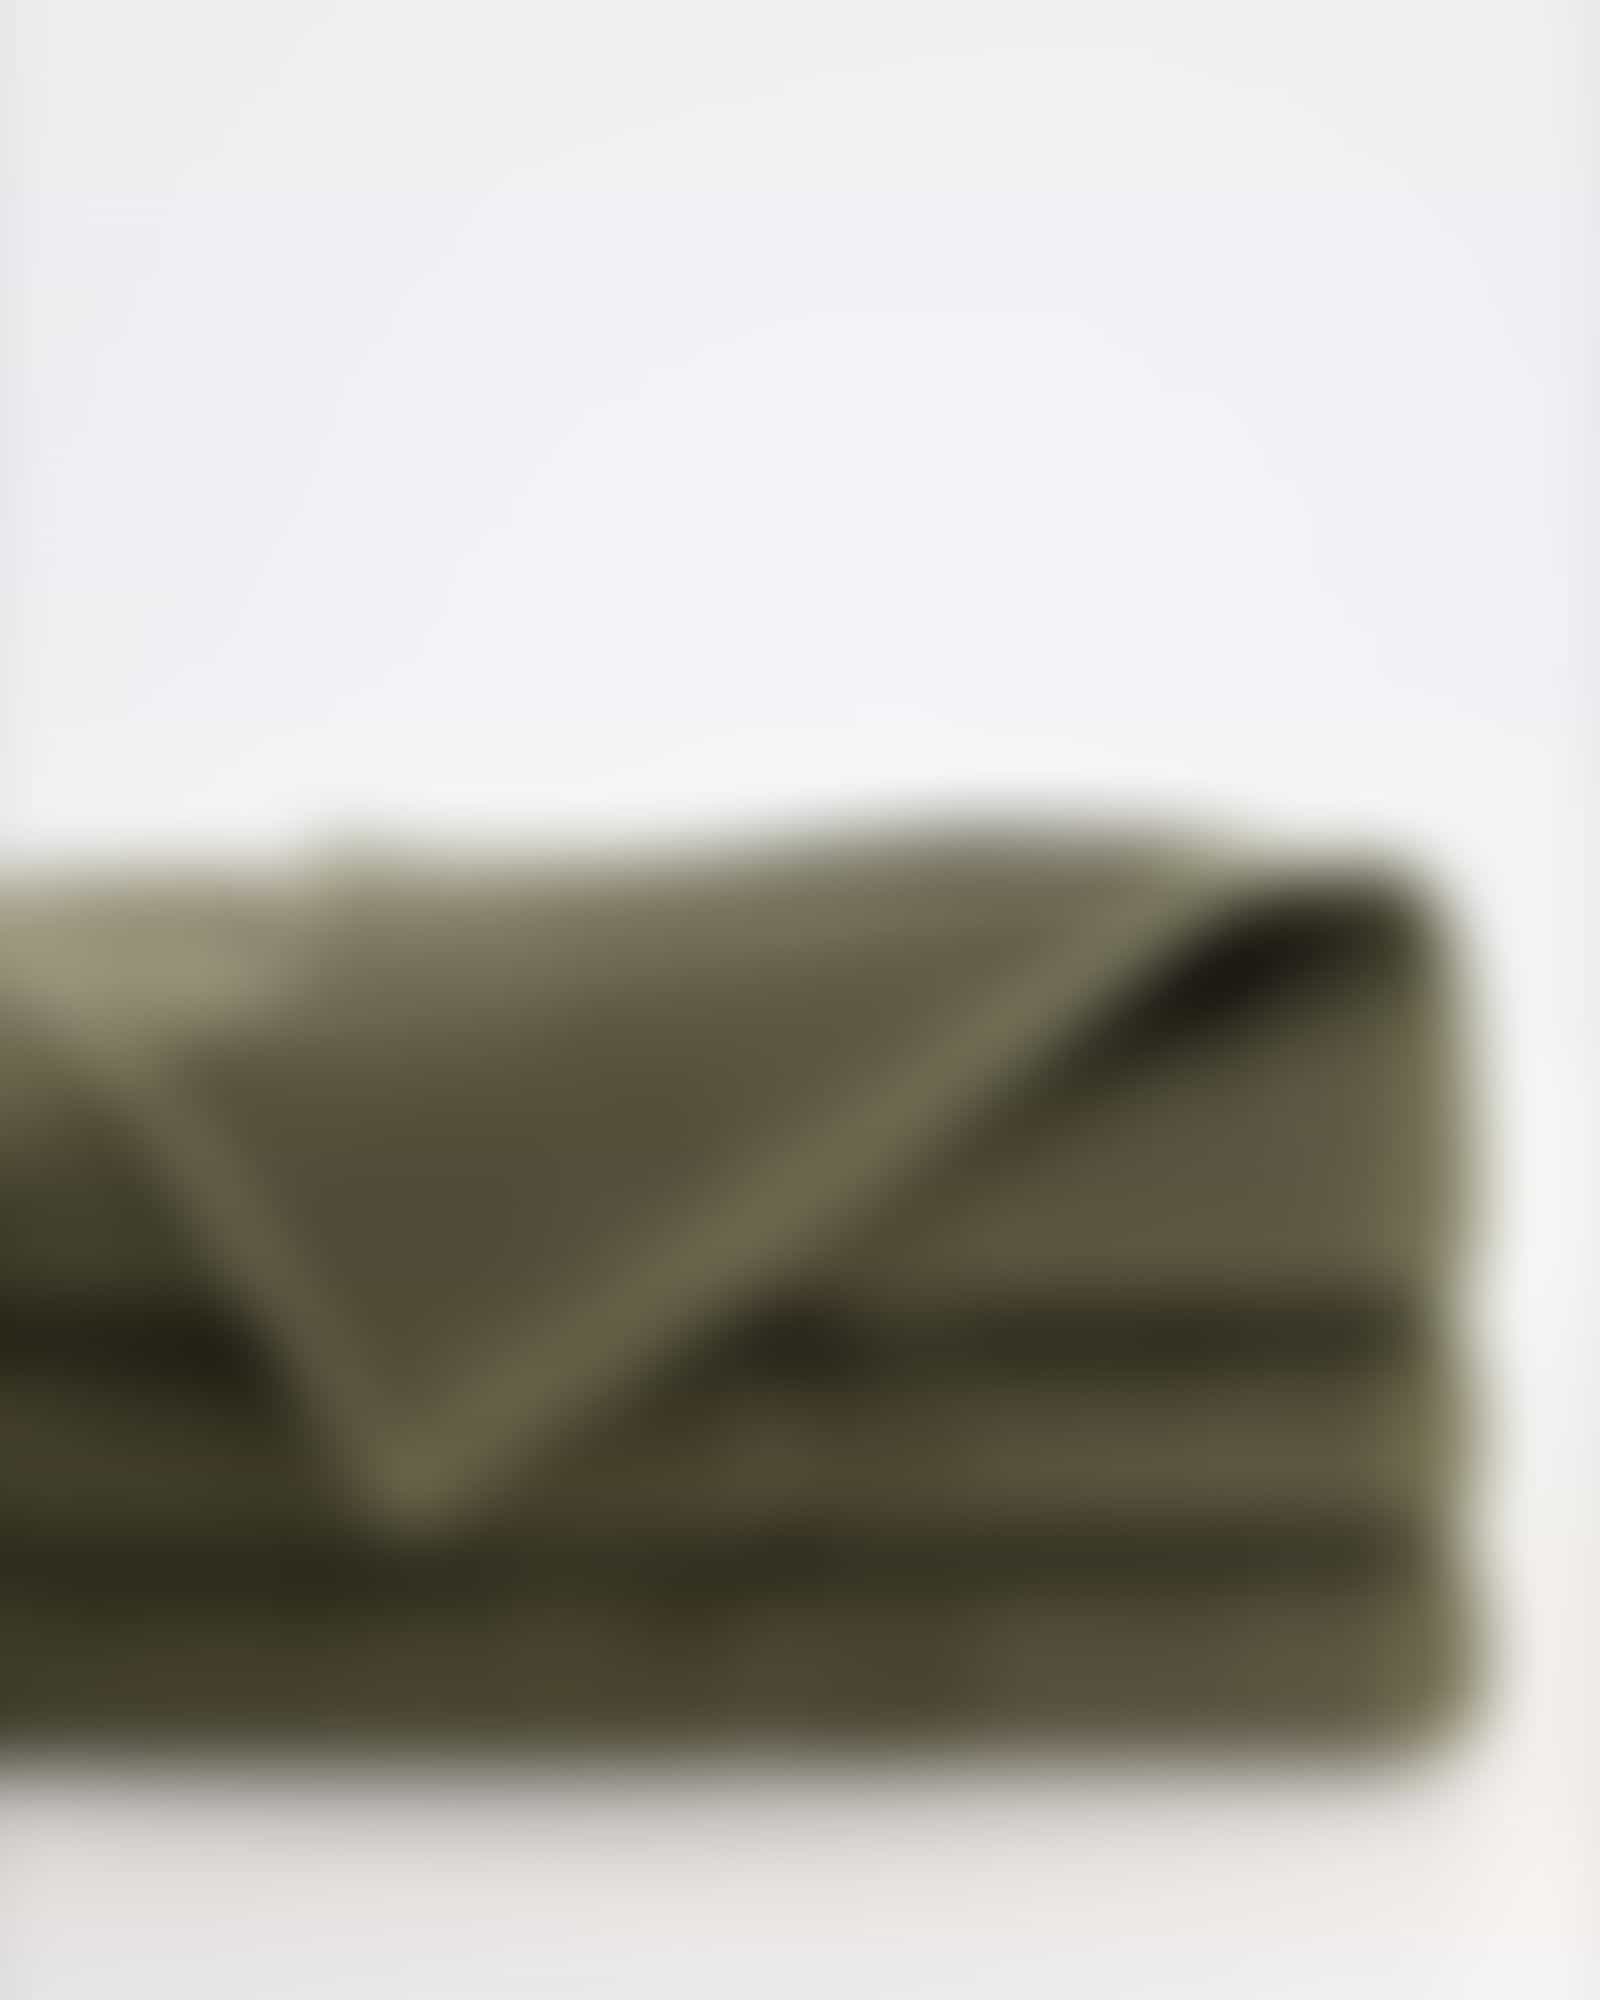 Möve Handtücher Wellbeing Perlstruktur - Farbe: sea grass - 677 - Saunatuch 80x200 cm Detailbild 2